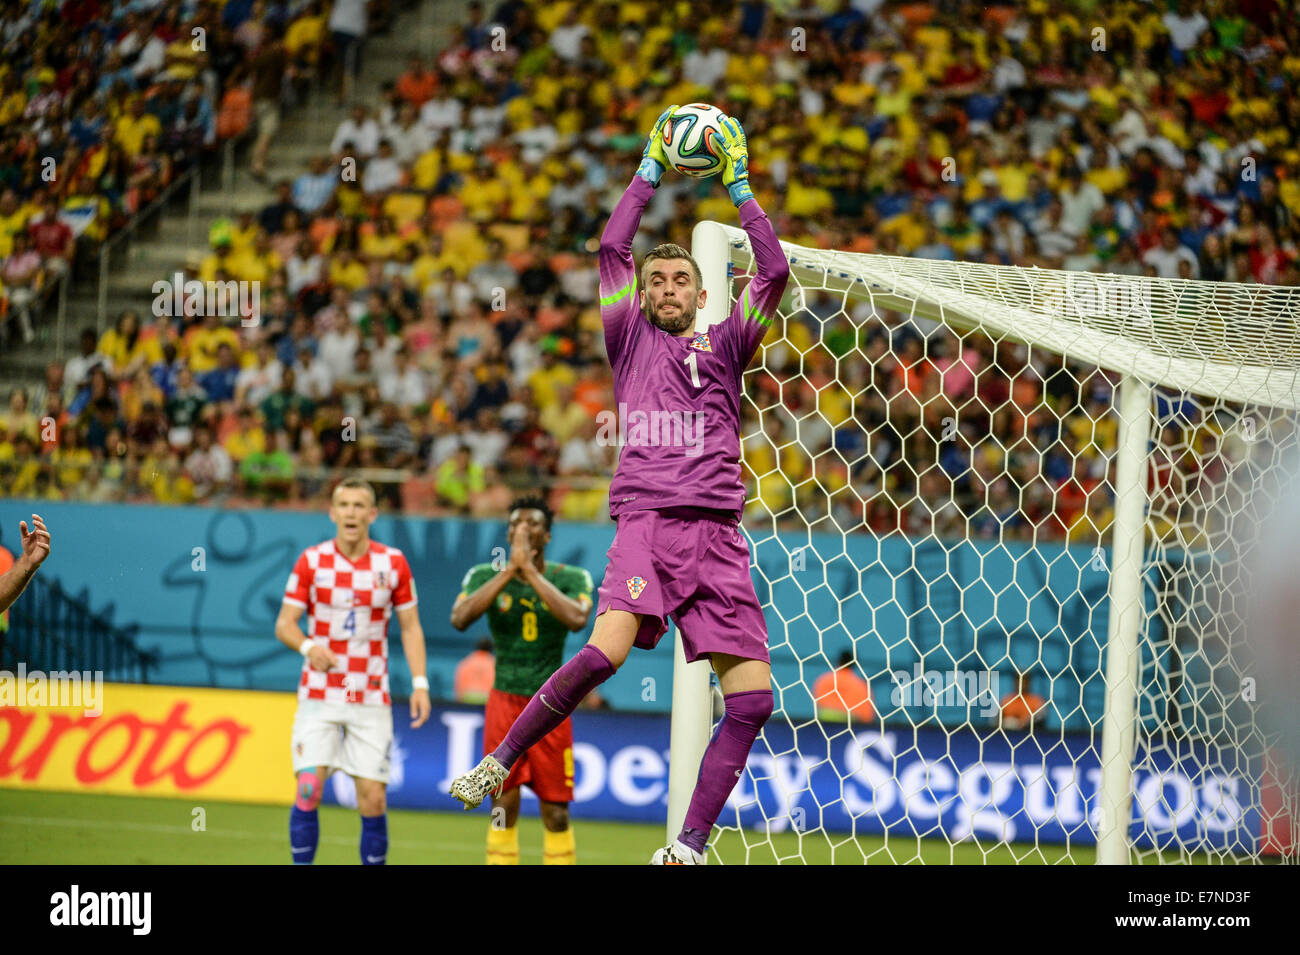 Stipe Pletikosa. Croatia v Cameroon. Group match. FIFA World Cup 2014 Brazil. Arena Amazonia, Manaus. 18 Jun 2014. Stock Photo